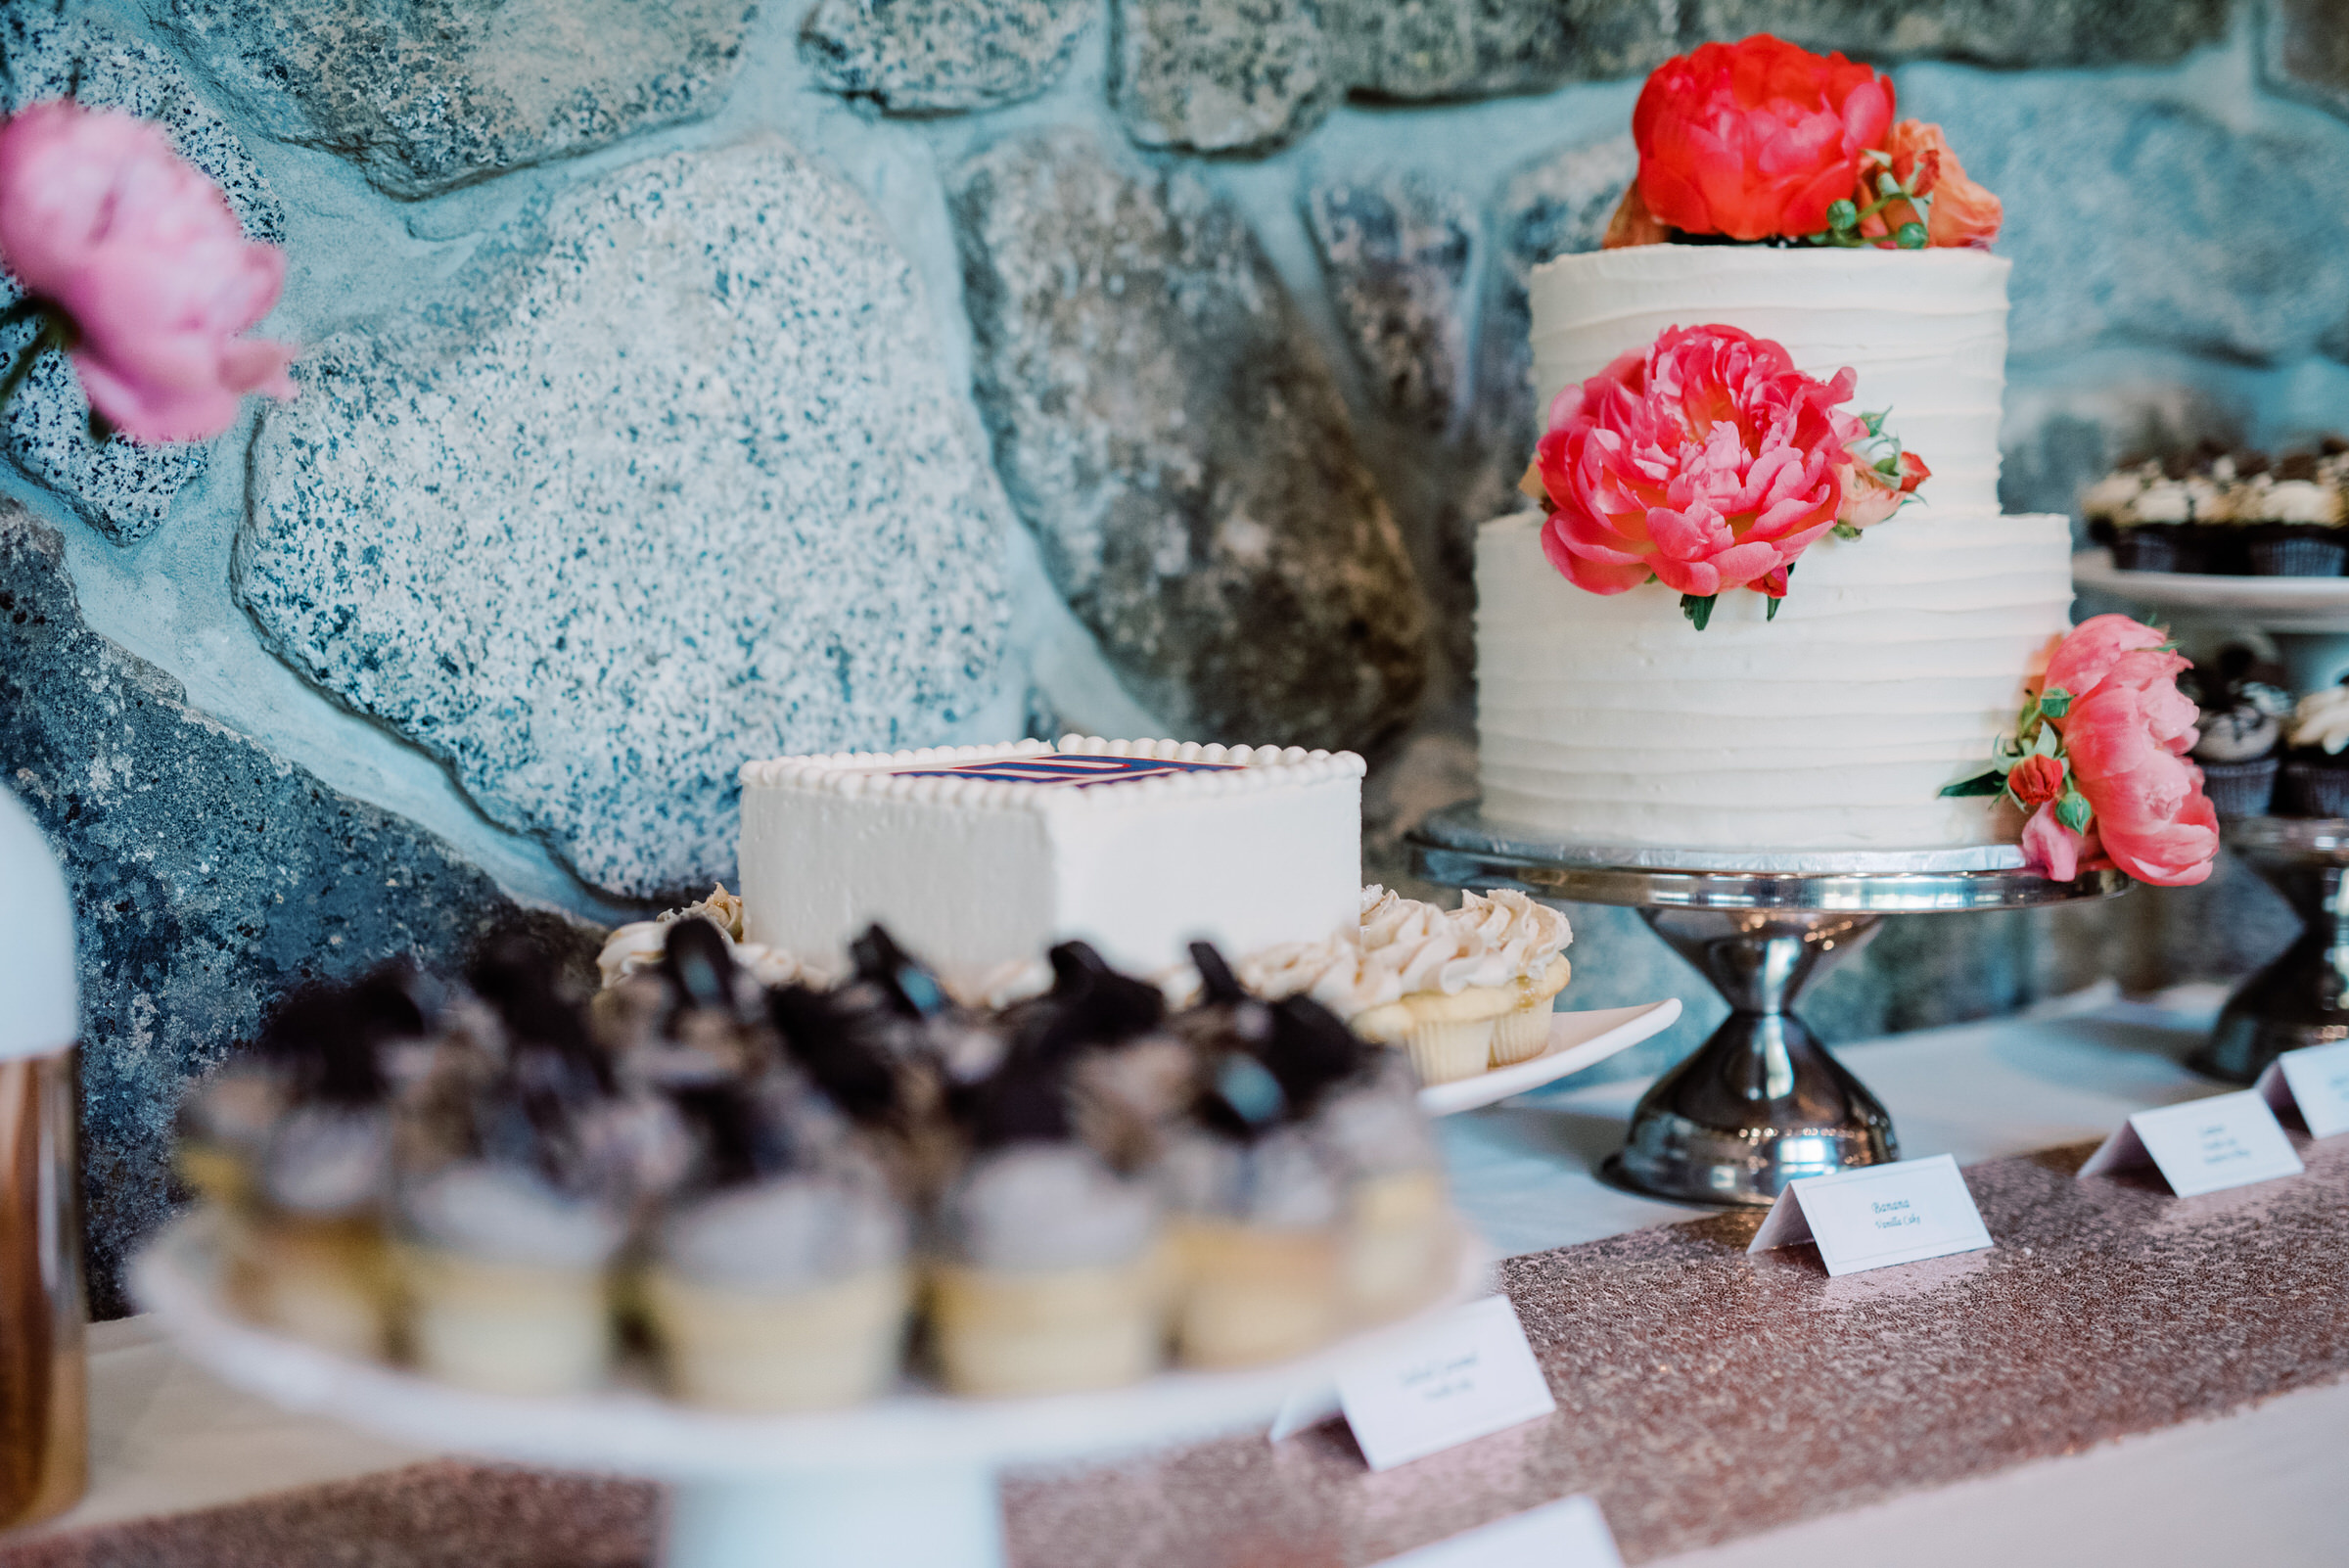 Sleeping Lady Resort weddings: The dessert table and wedding cake